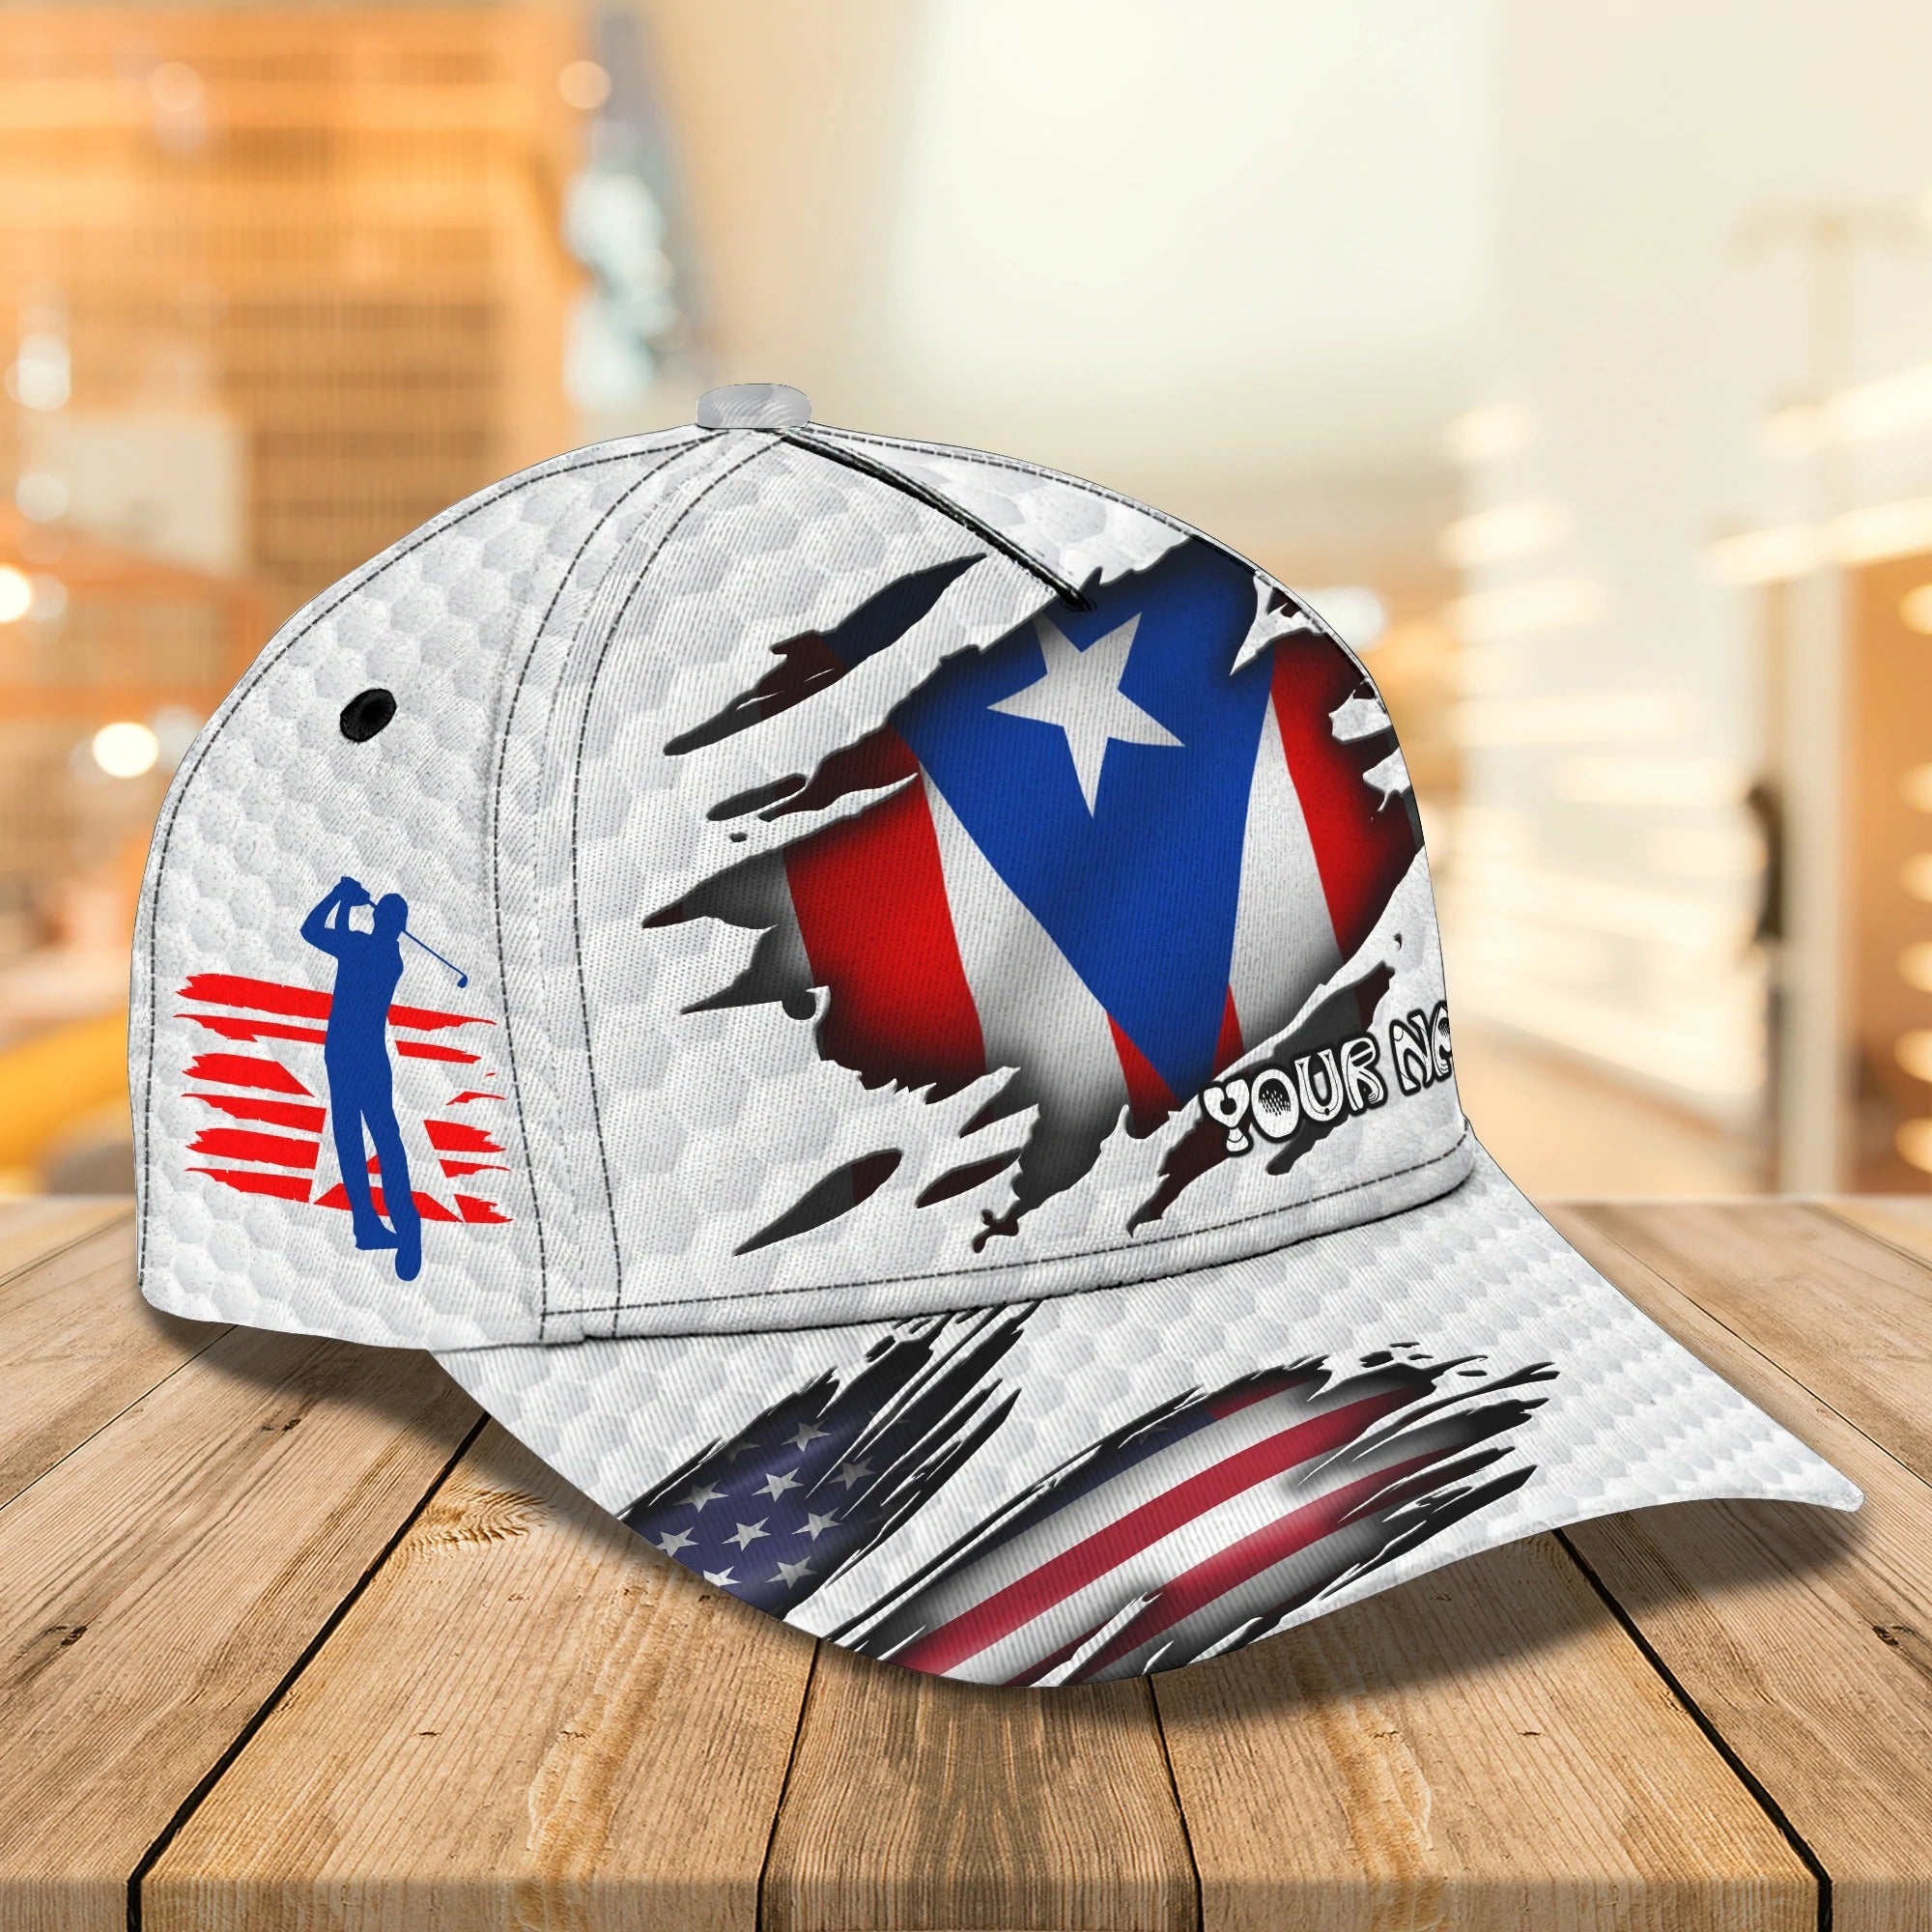 Customized Golf Hats For Men/ Golf Hat Mens/ Baseball Golf Cap/ Gift For Golf Man